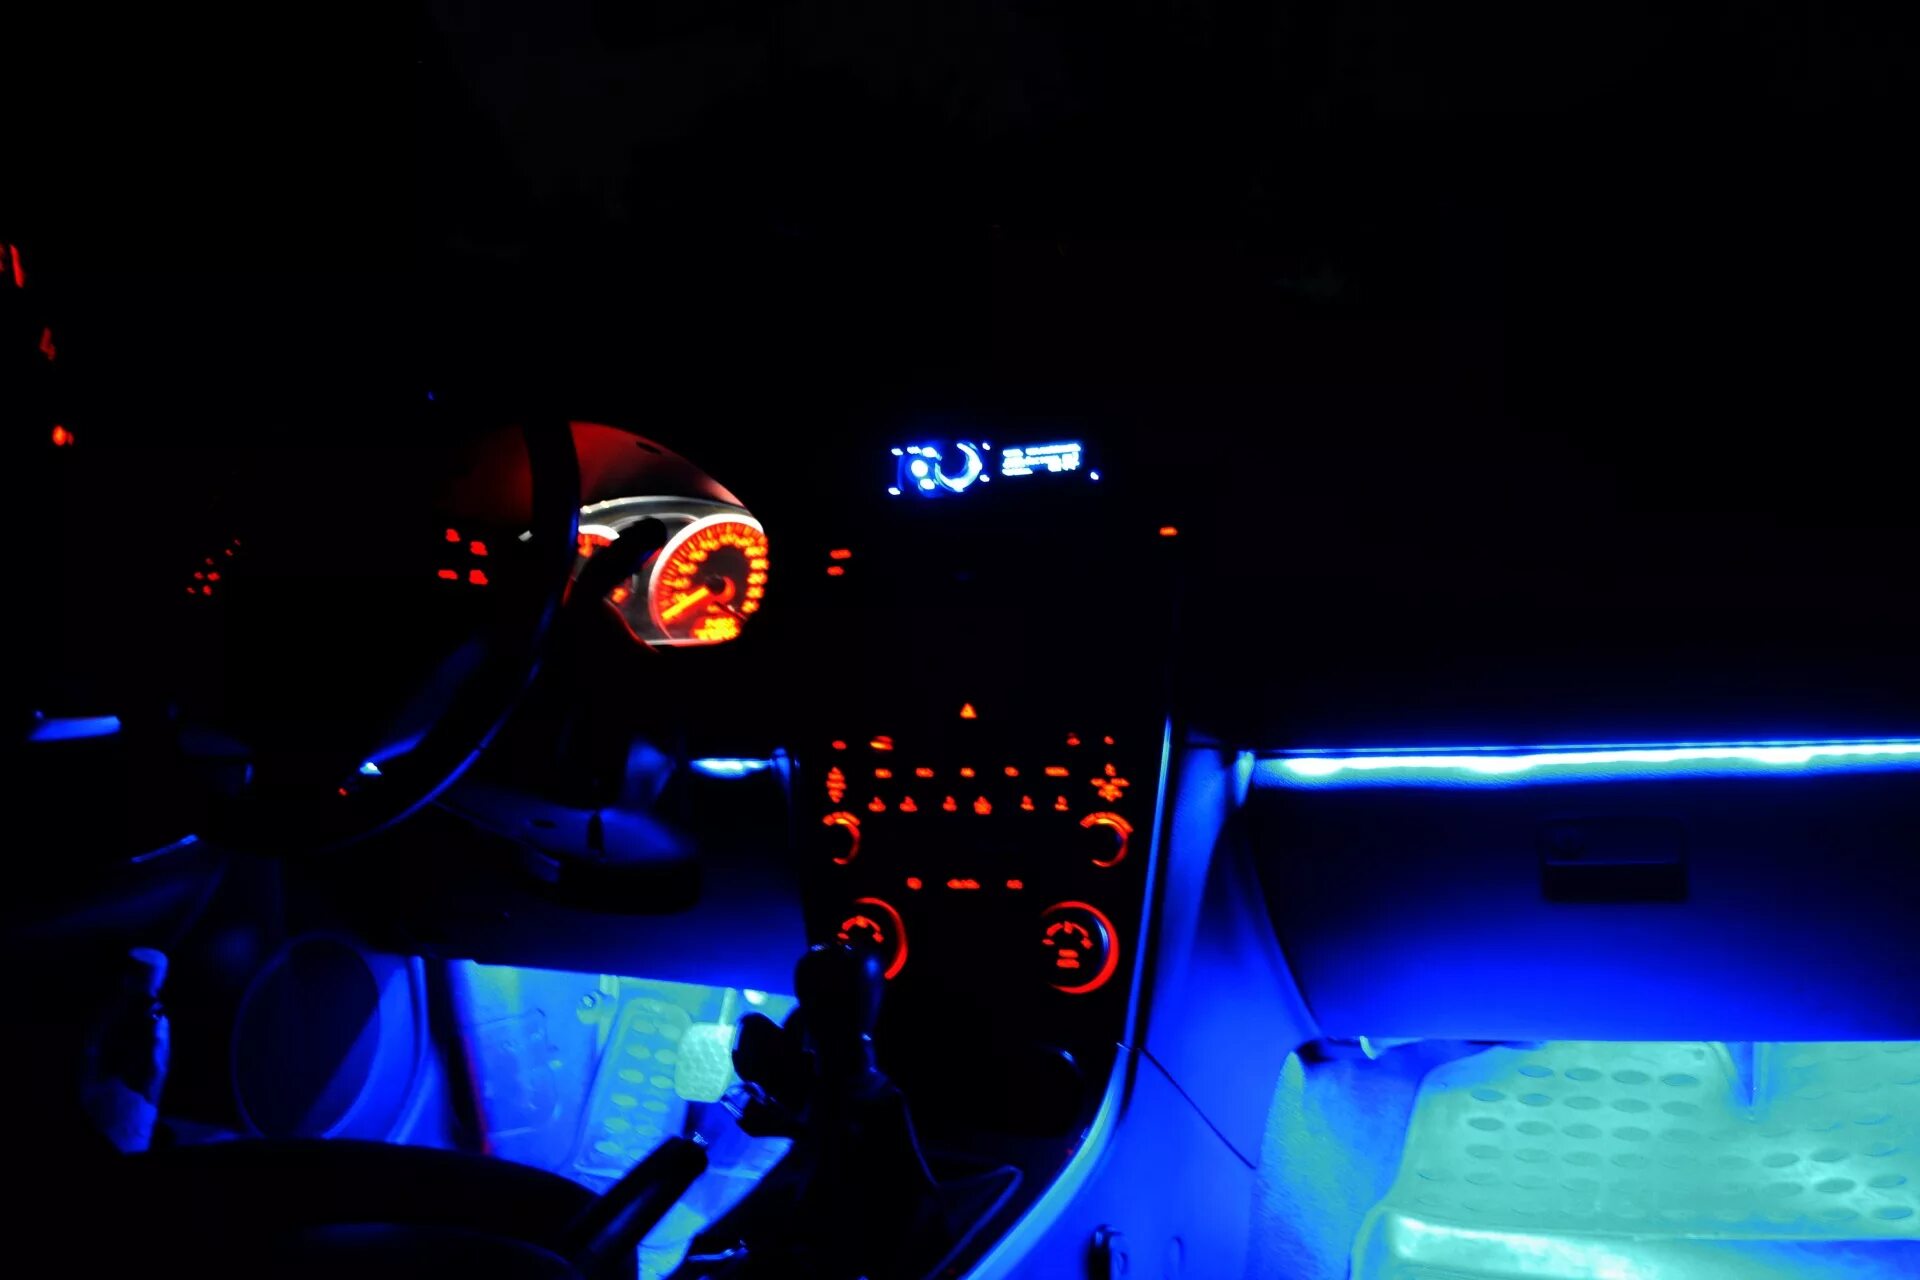 Неоновая подсветка Мазда 3 БК. Mazda 3bk неоновая подсветка. Mazda RX 8 неоновая подсветка. Неоновая подсветка в Мазда 6.